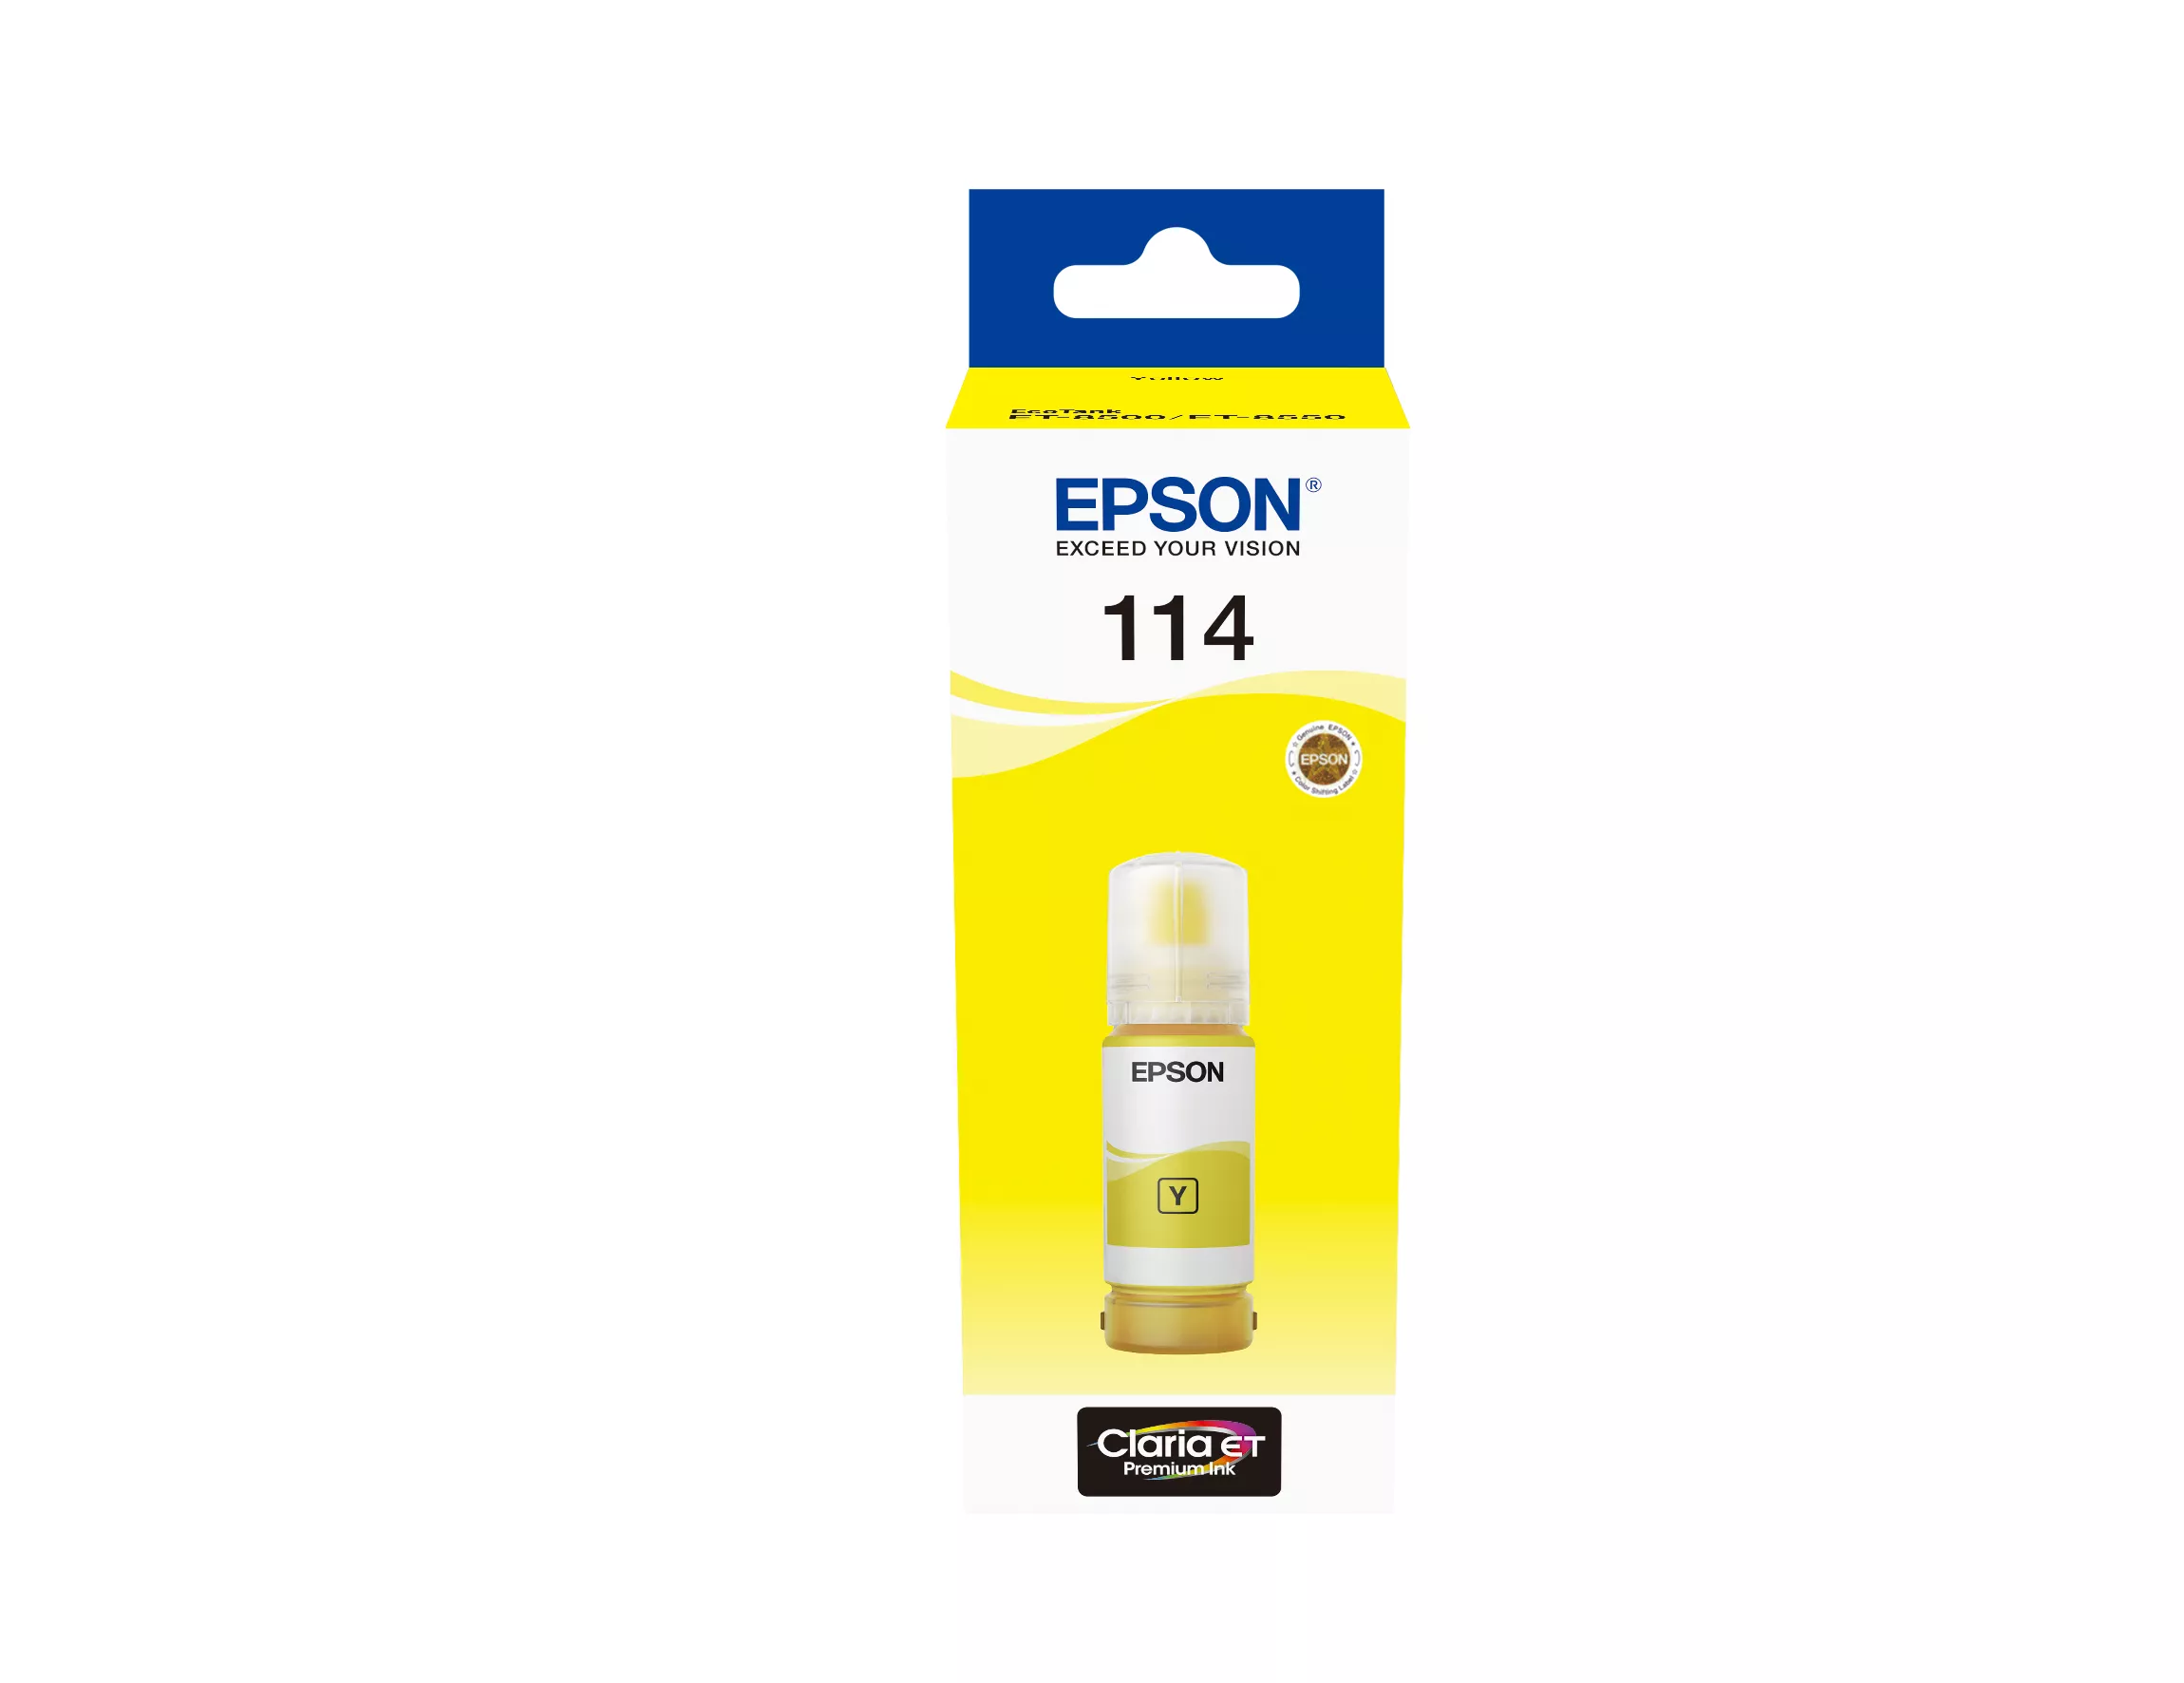 Revendeur officiel EPSON 114 EcoTank Yellow ink bottle